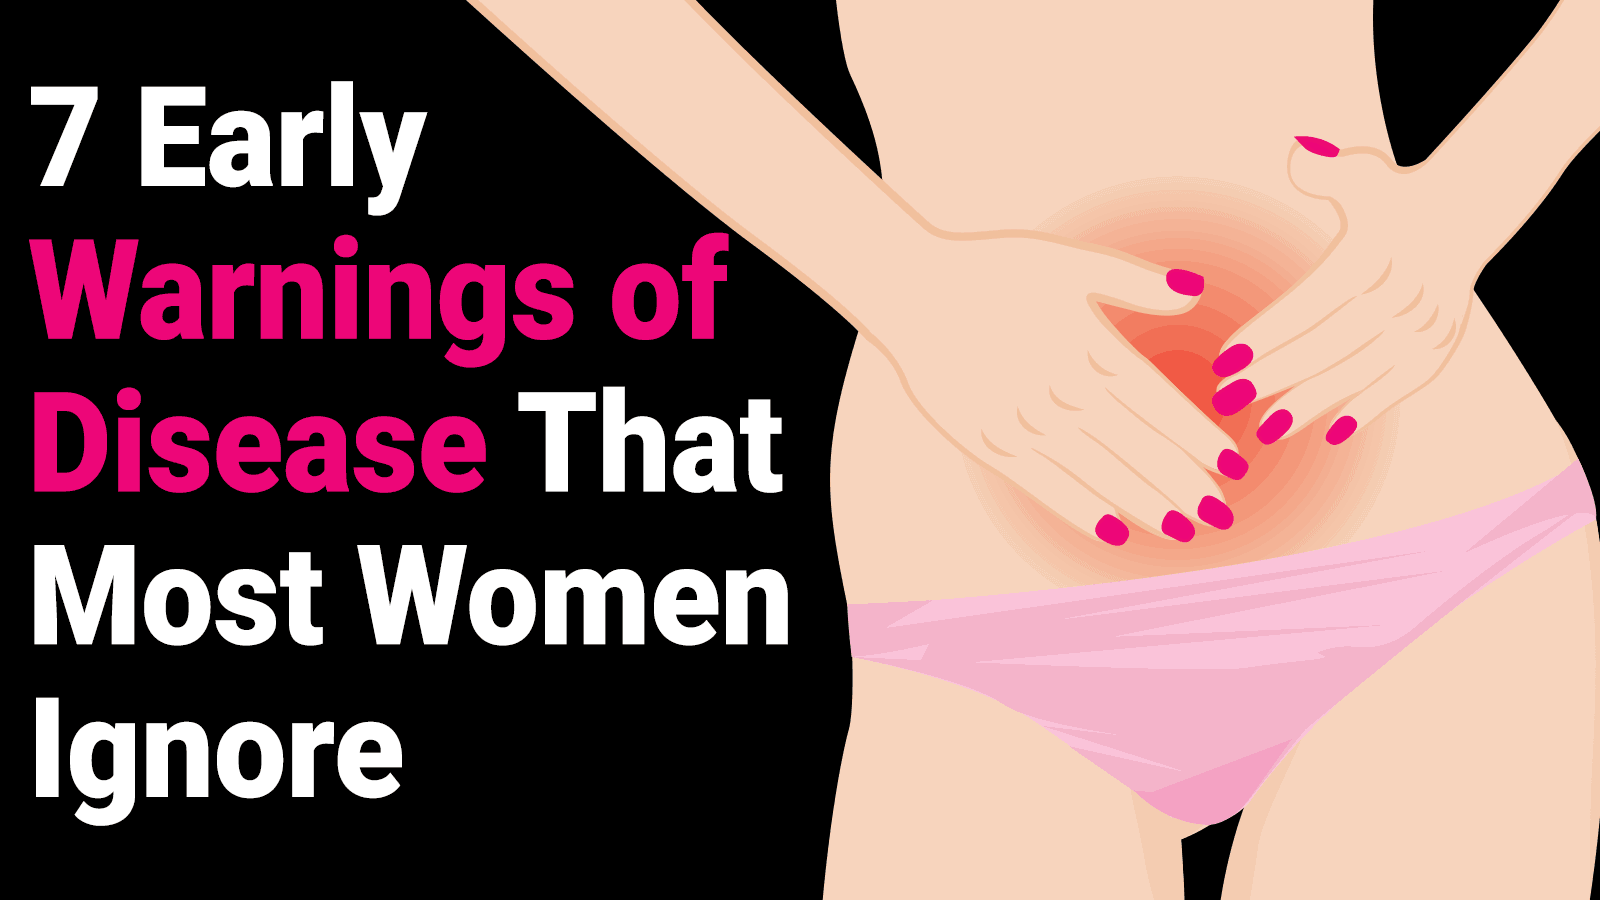 7 Early Warnings of Disease That Most Women Ignore